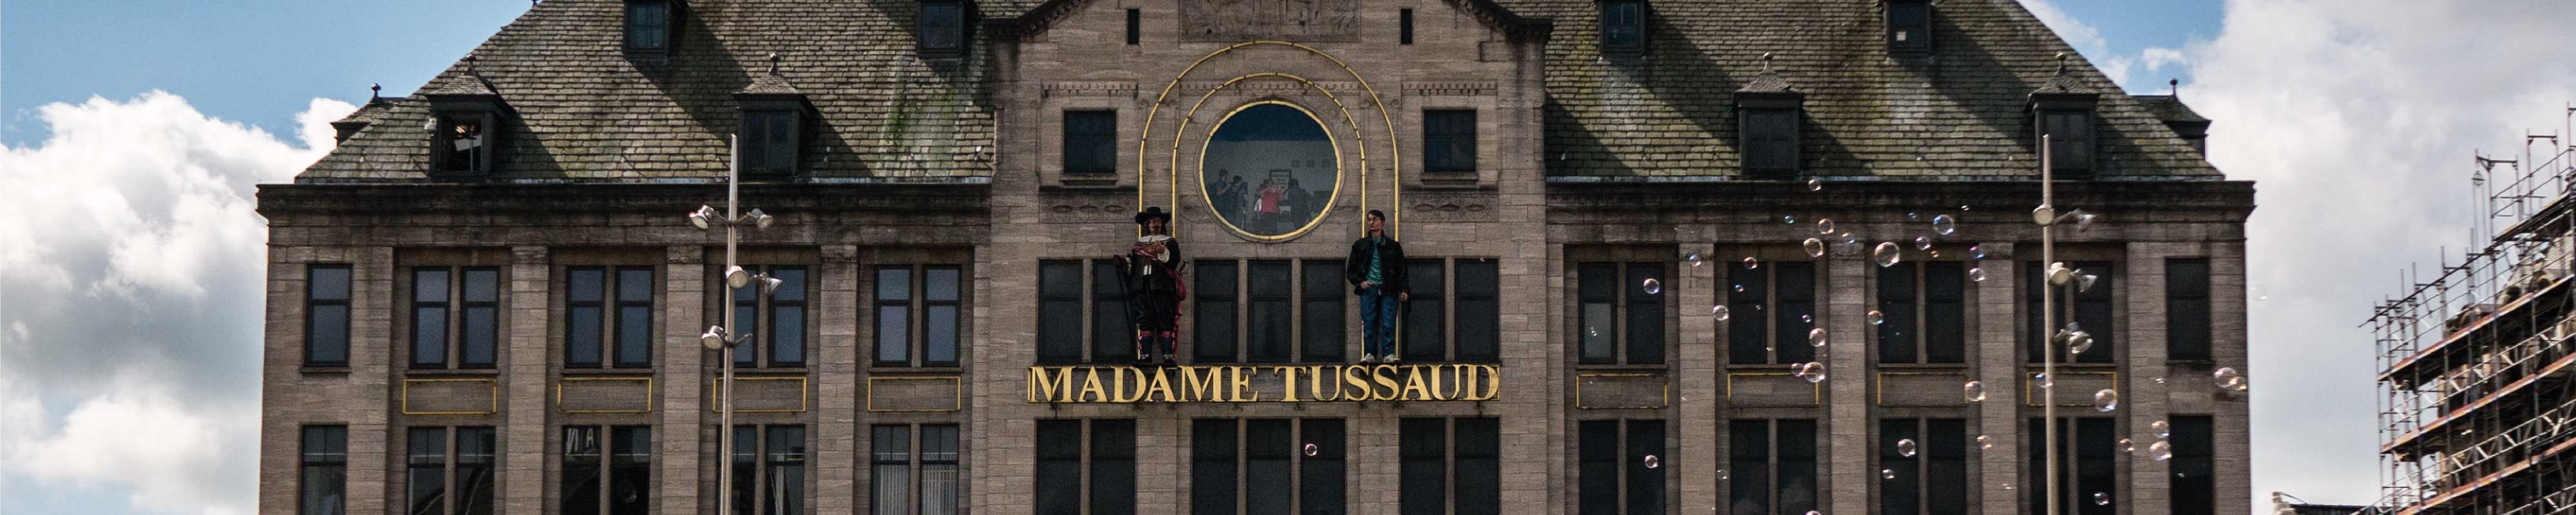 Deposito Bagagli | Madame Tussauds a Londra - Nannybag